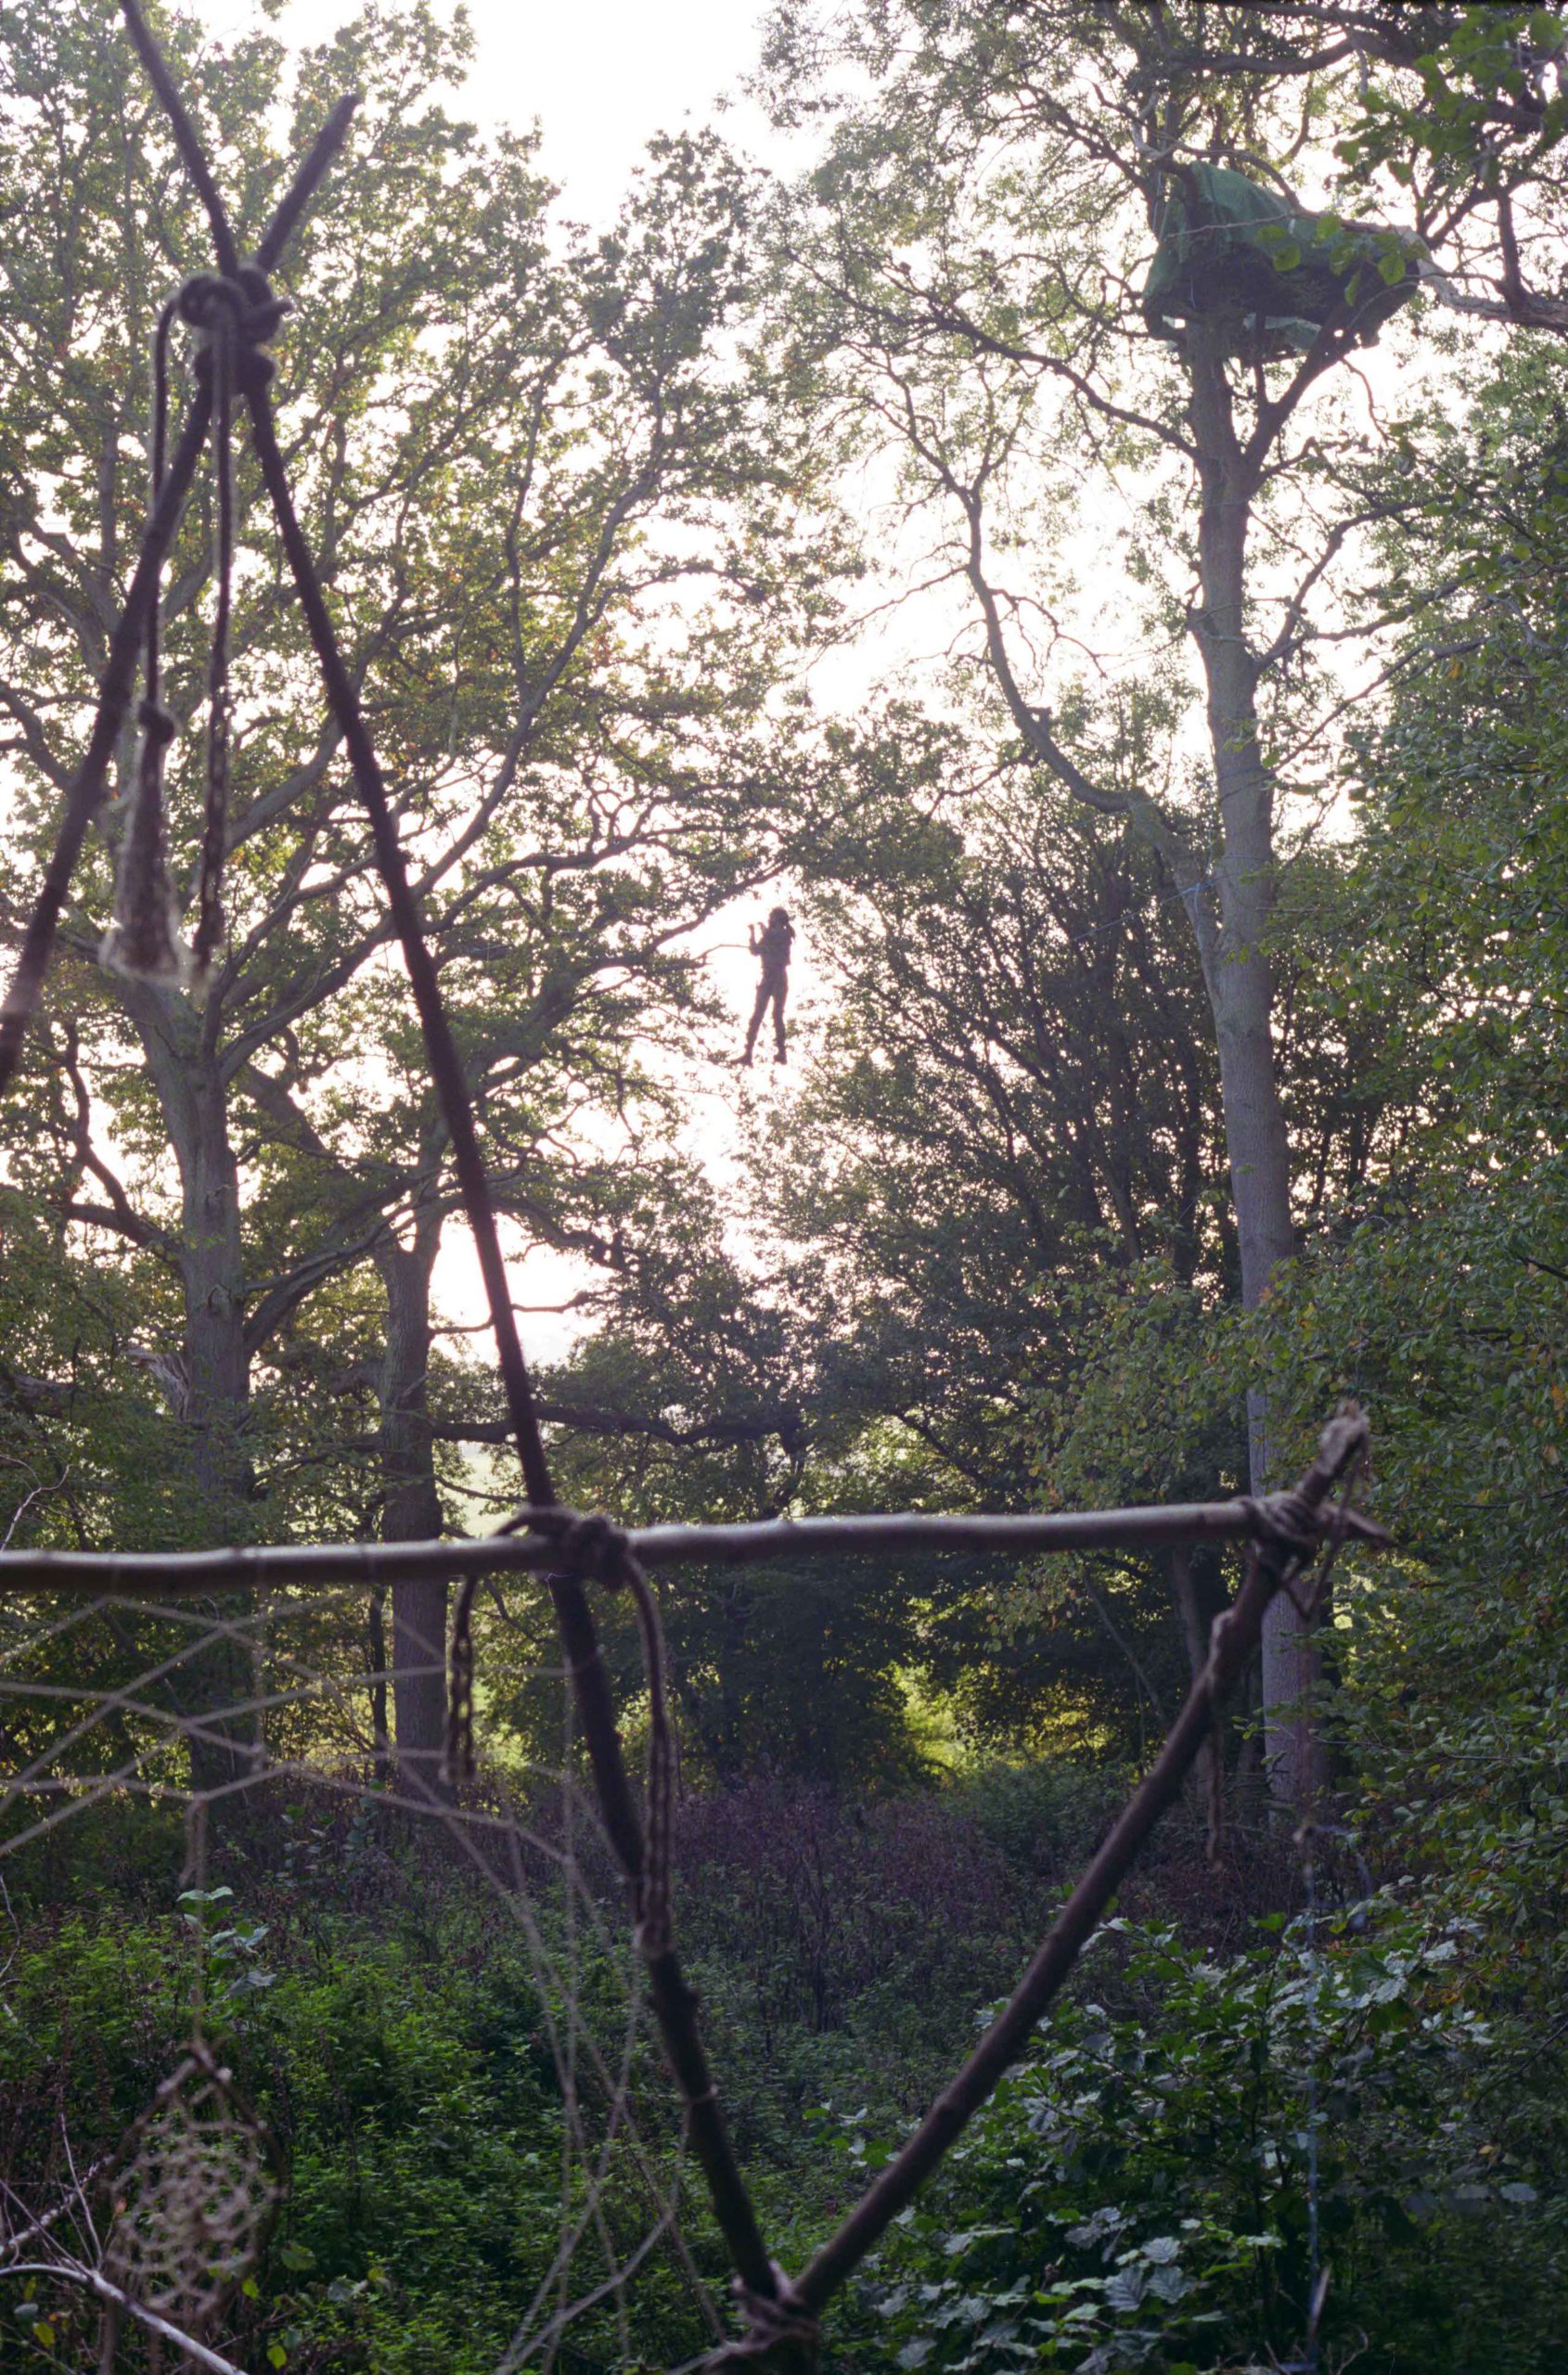 Person climbing along ropes between trees, historical photograph